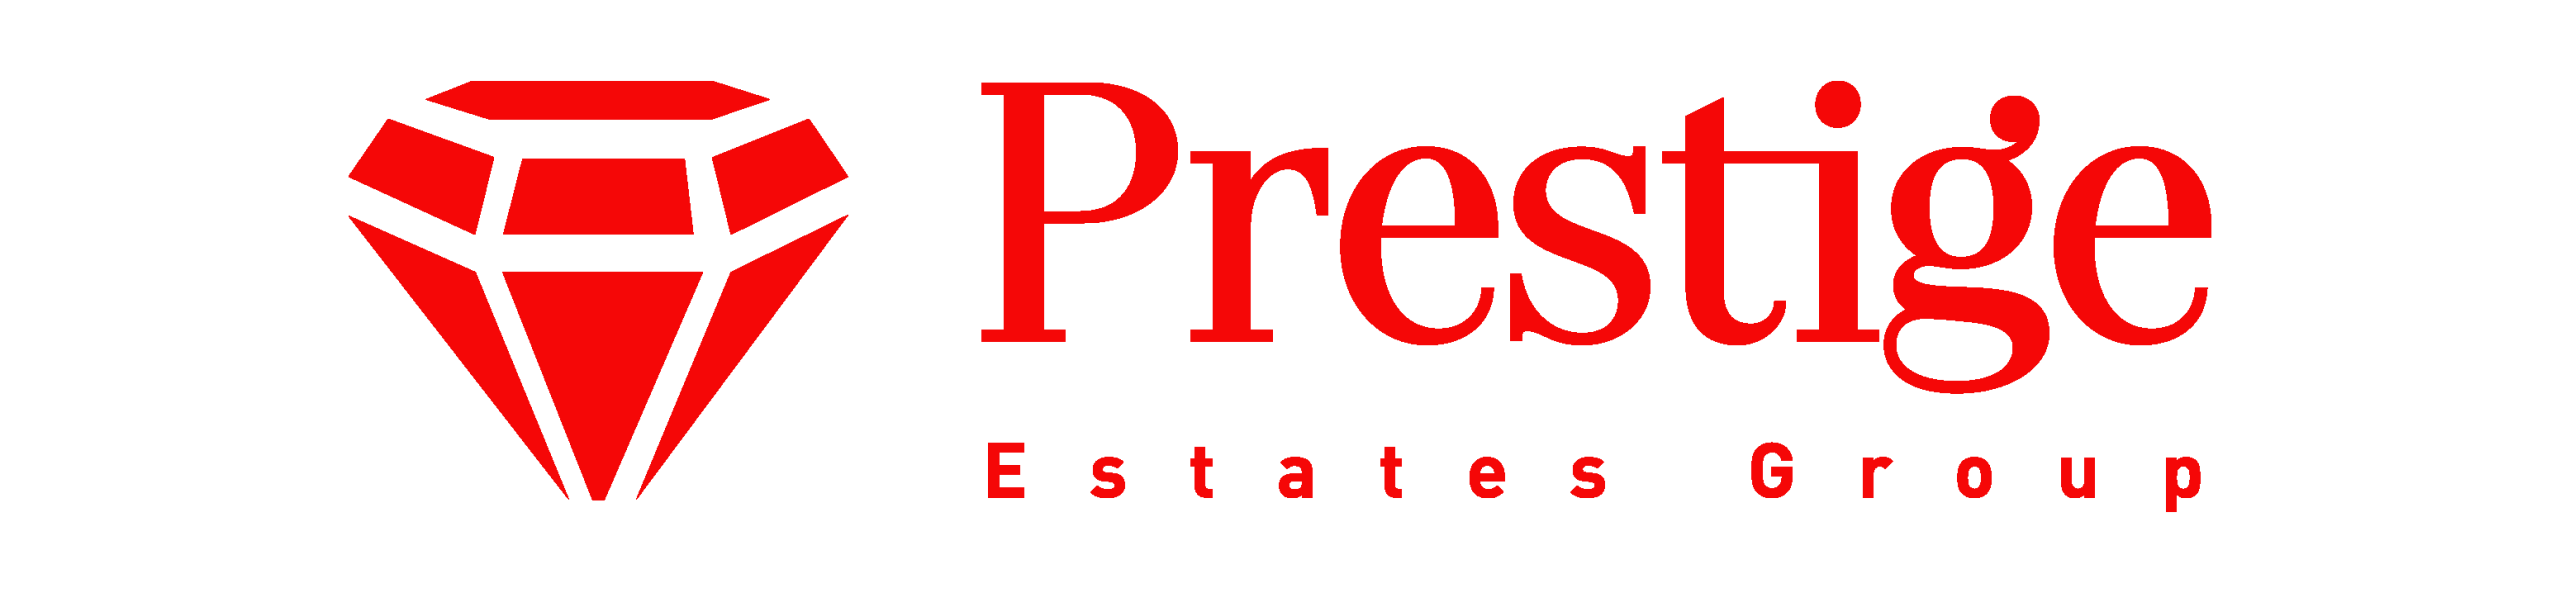 Prestige Estates Group